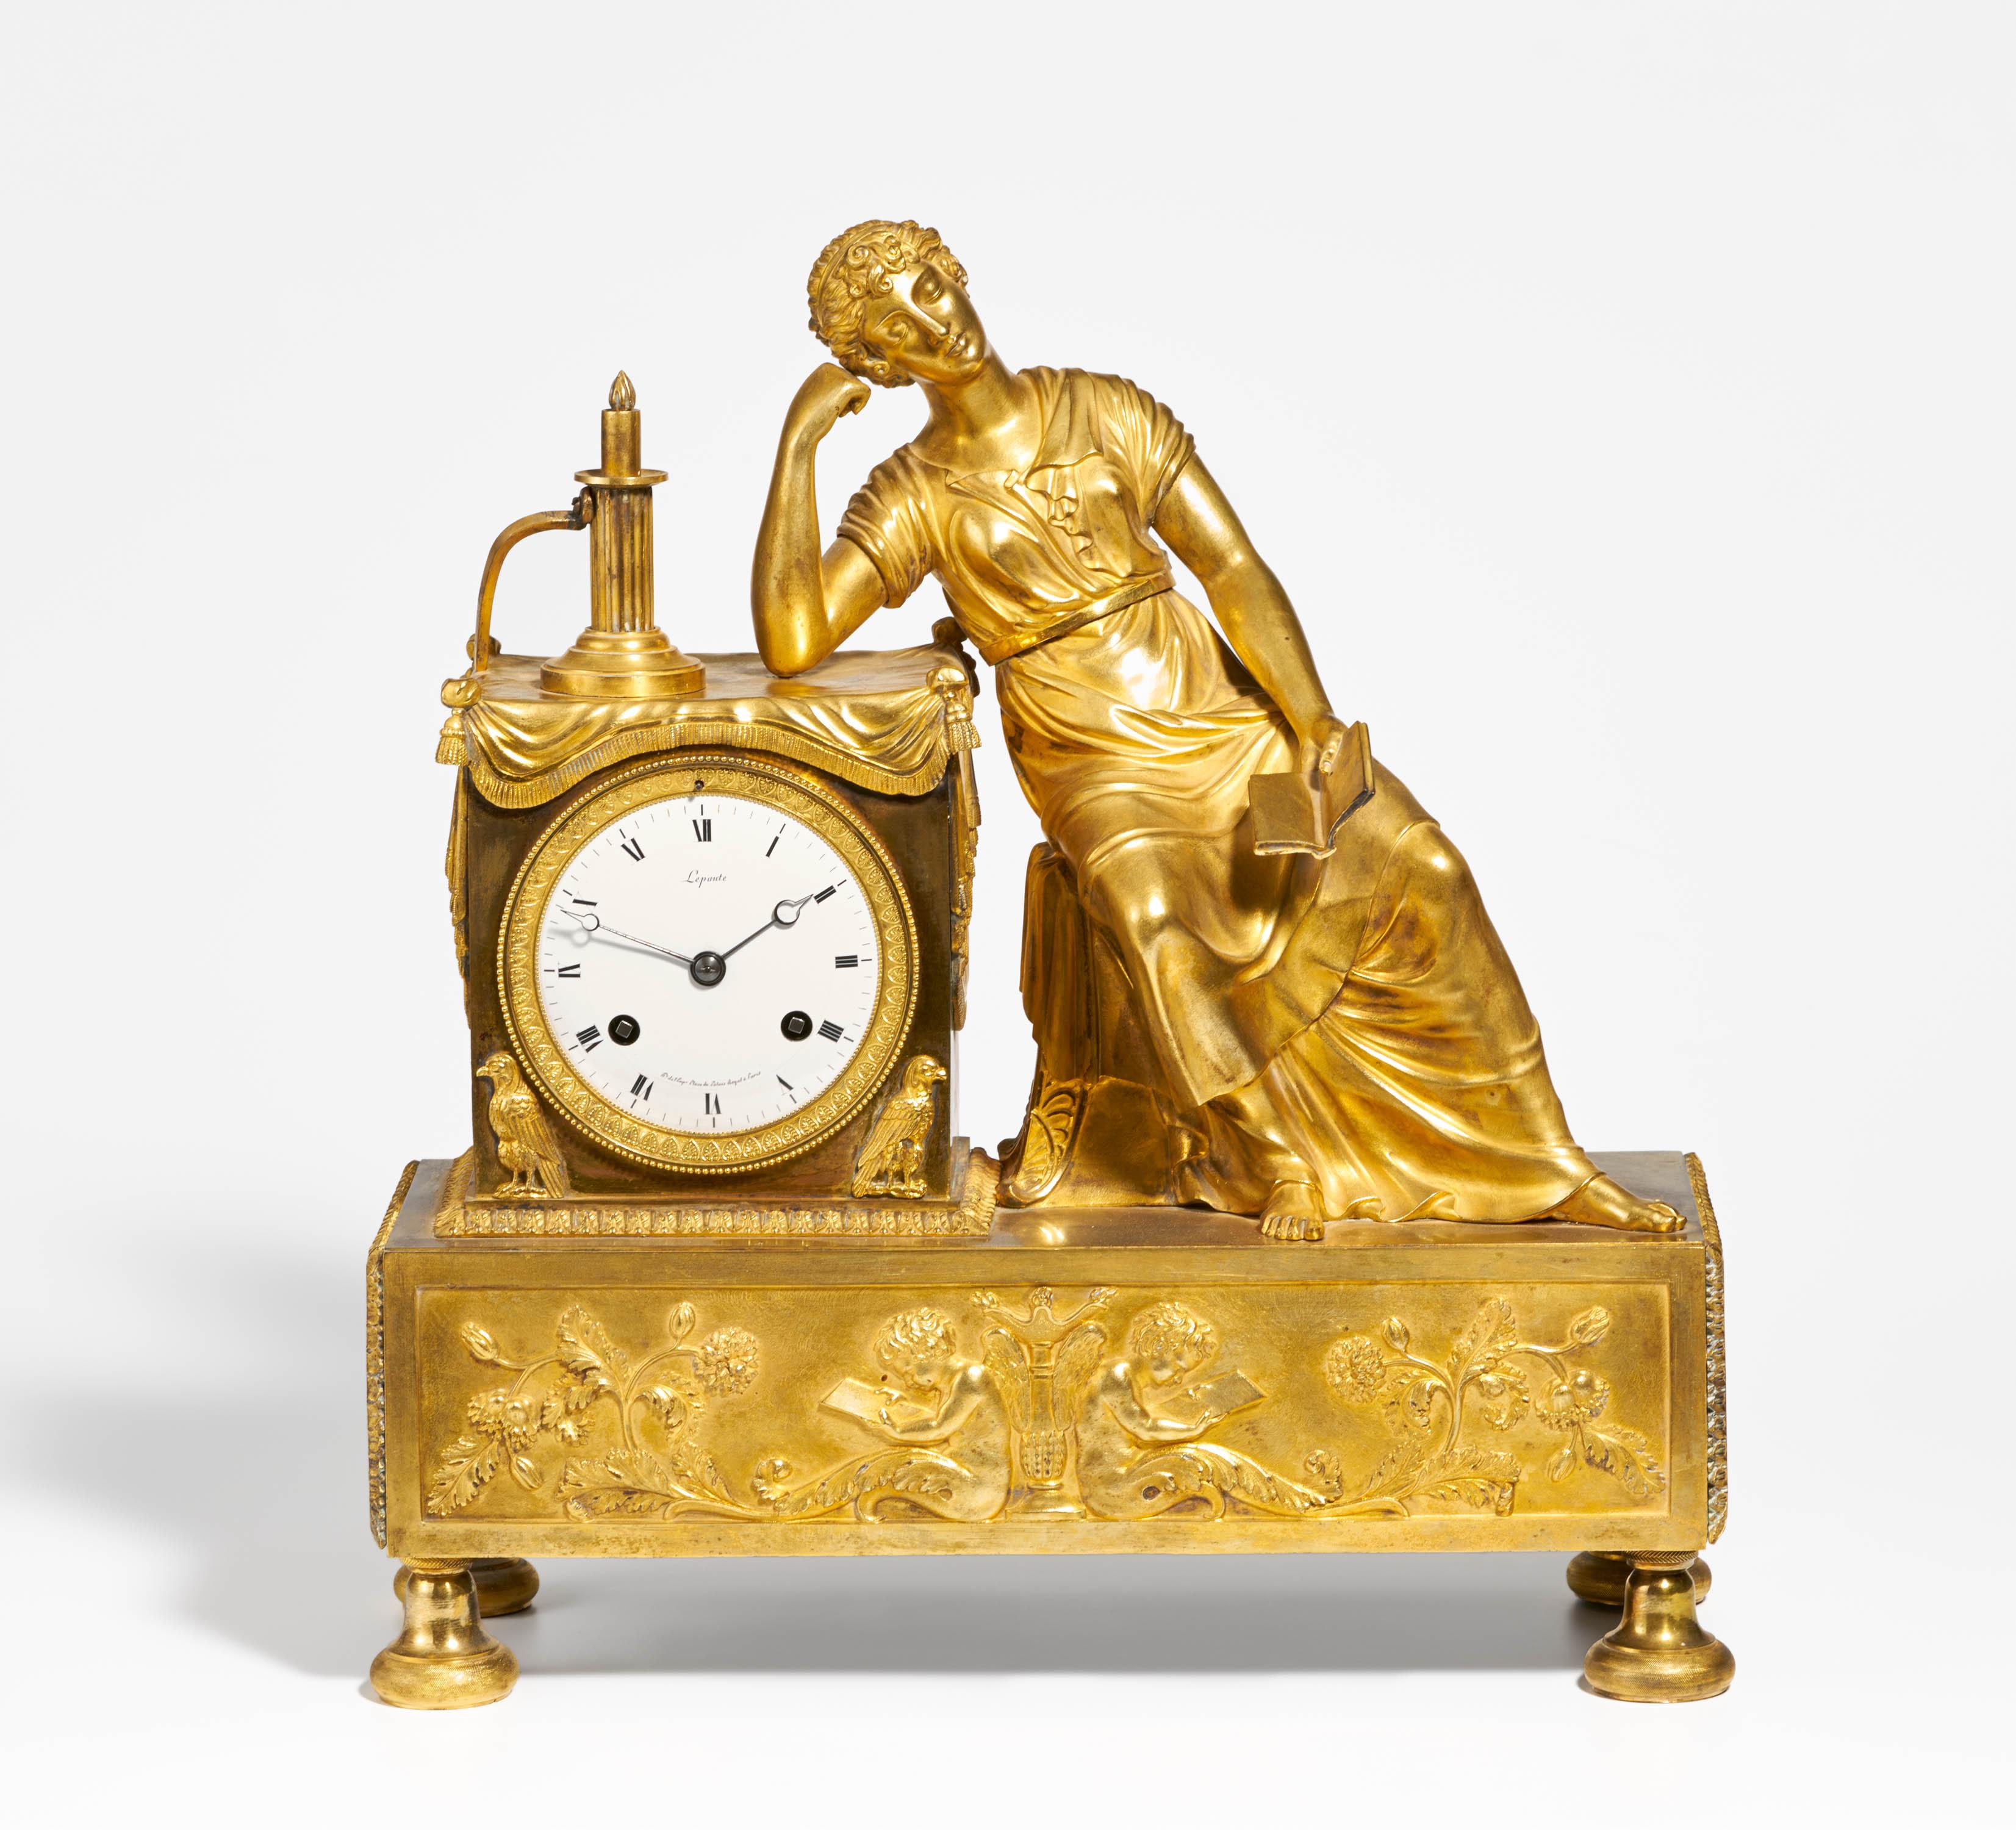 Empire pendulum clock with sleeping lady